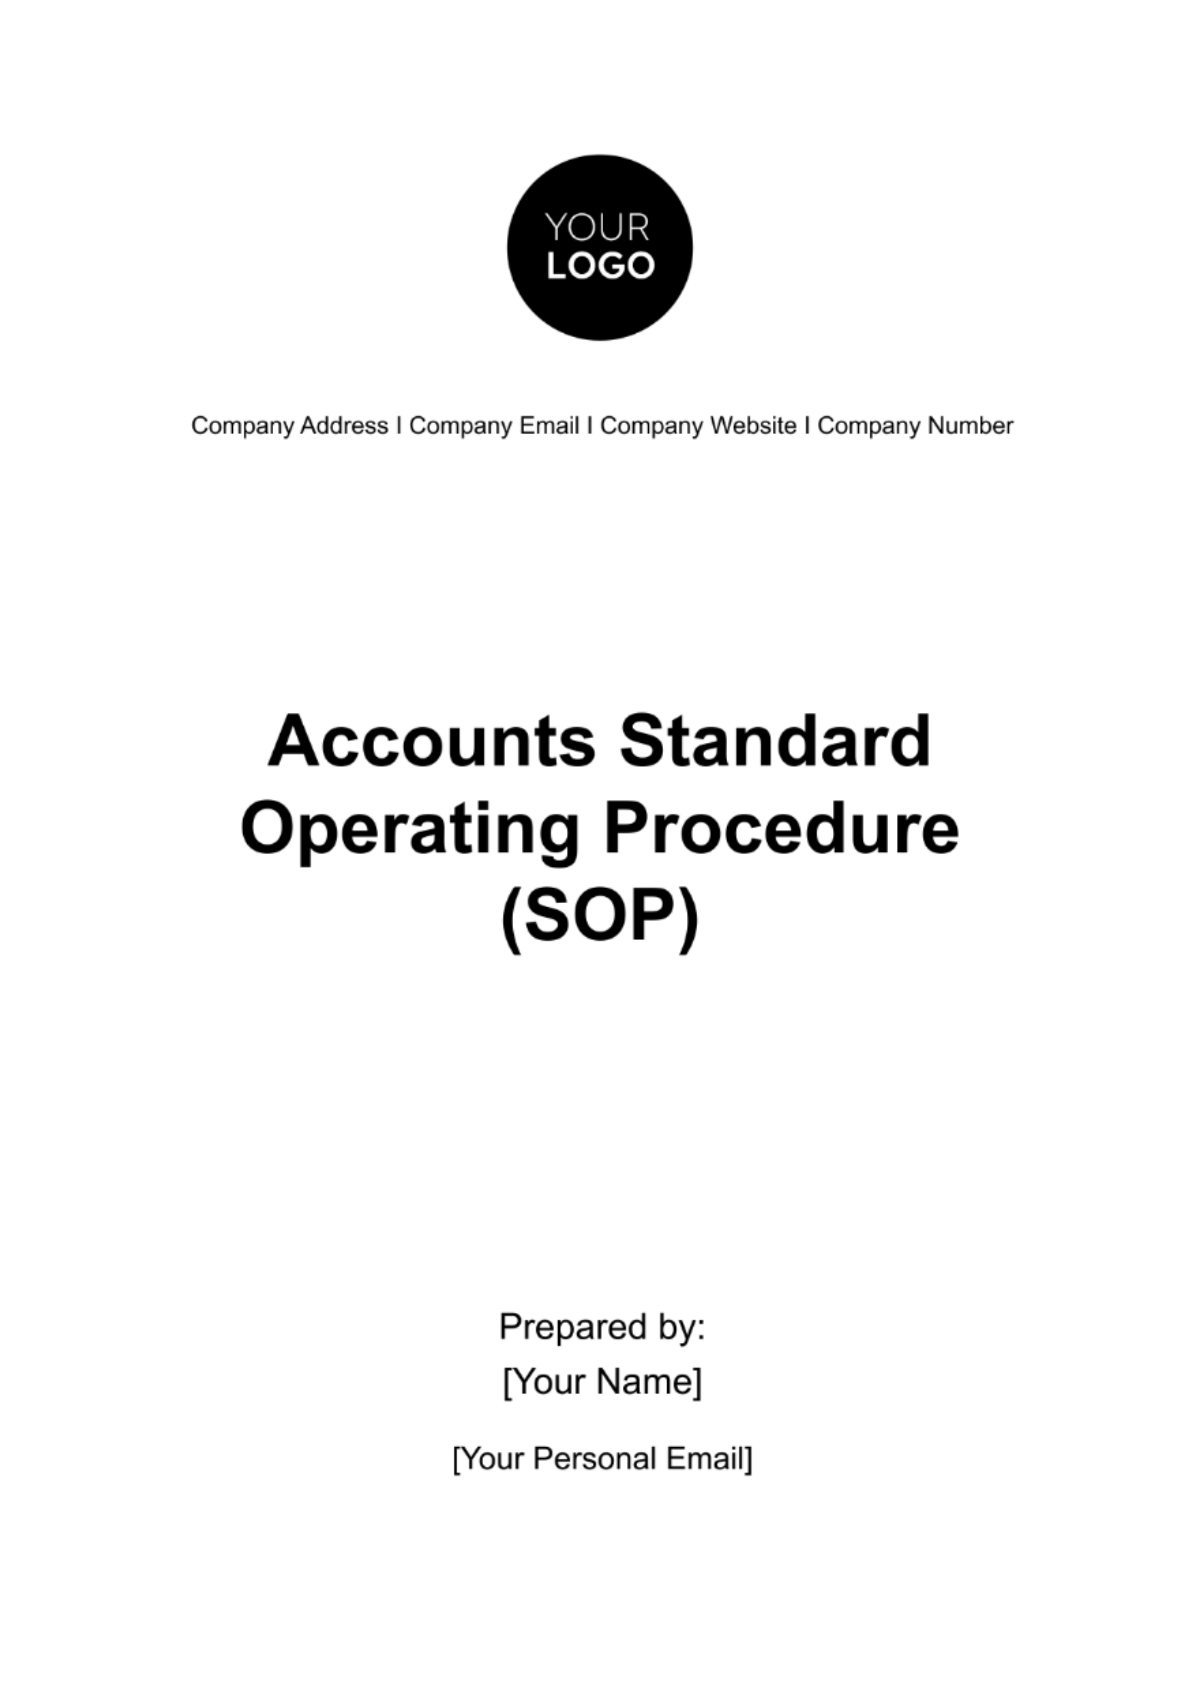 Free Accounts Standard Operating Procedure (SOP) Template